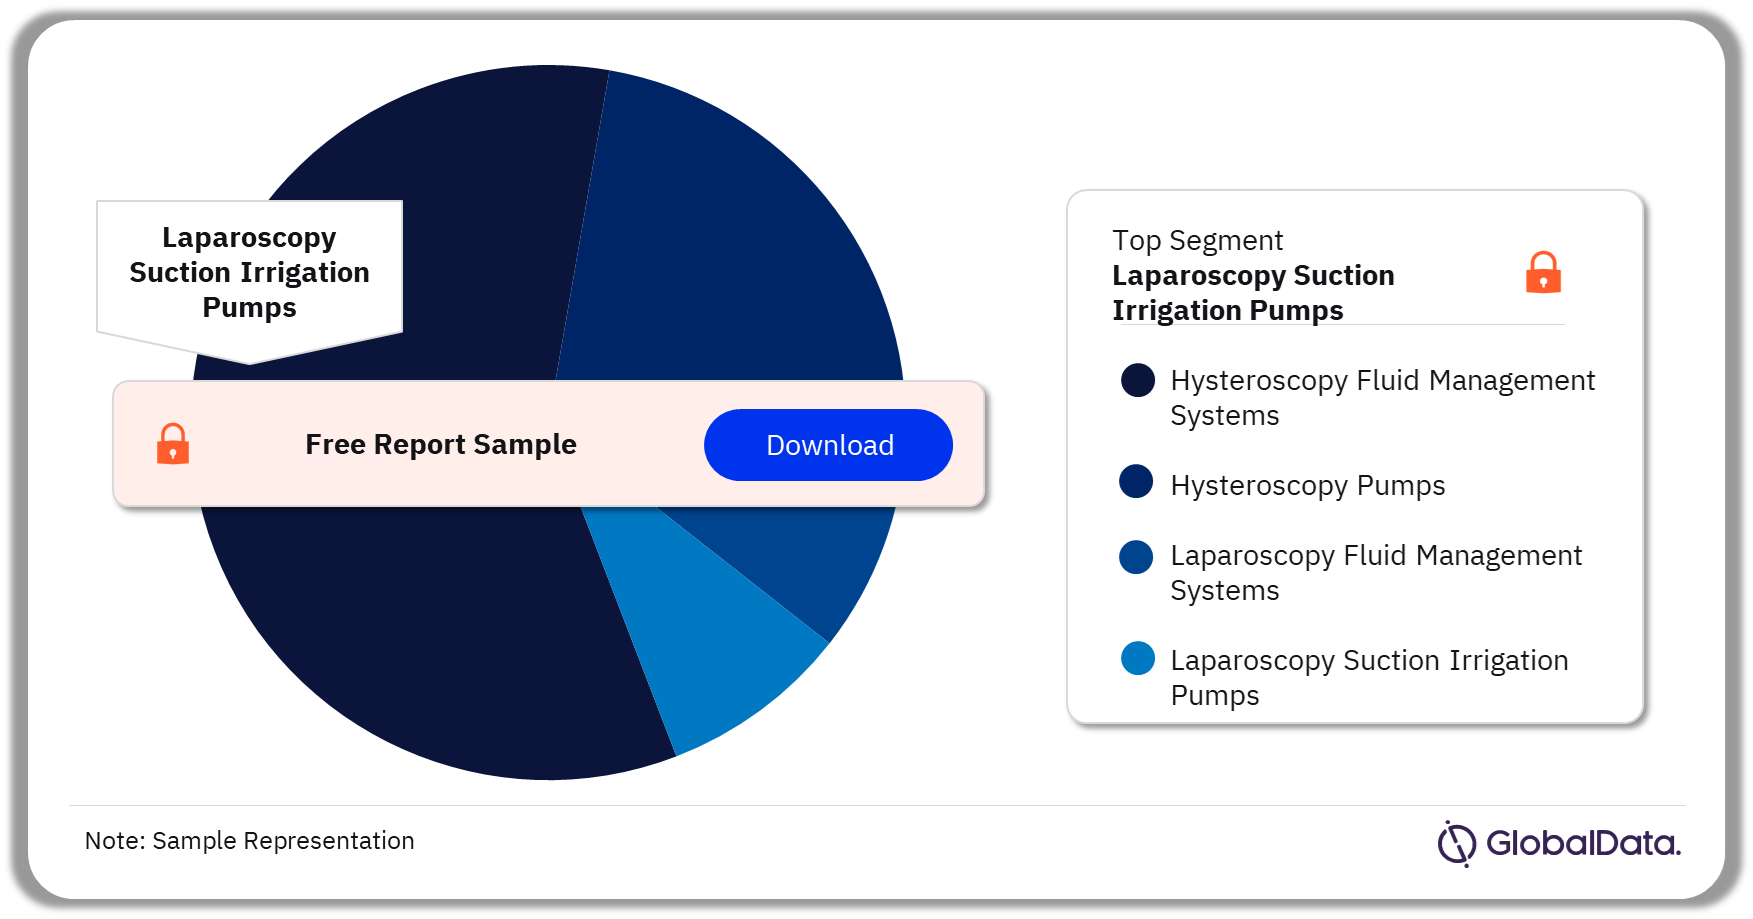 Endoscopy Fluid Management Systems Market Analysis by Segments, 2023 (%)